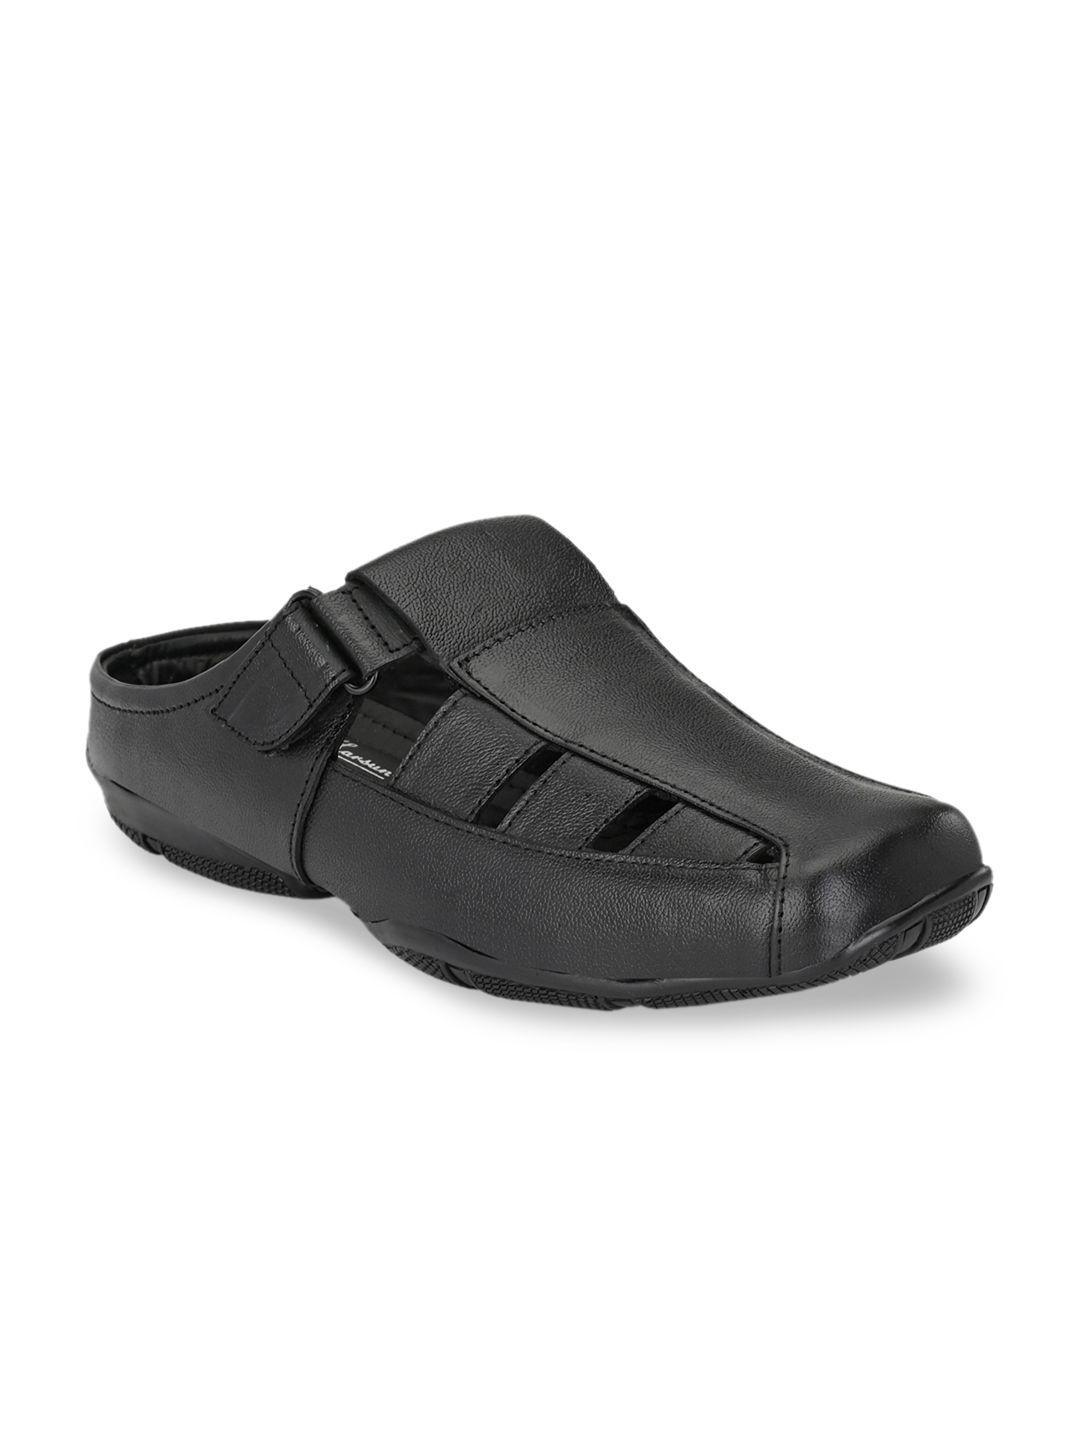 john-karsun-men-black-leather-sandals